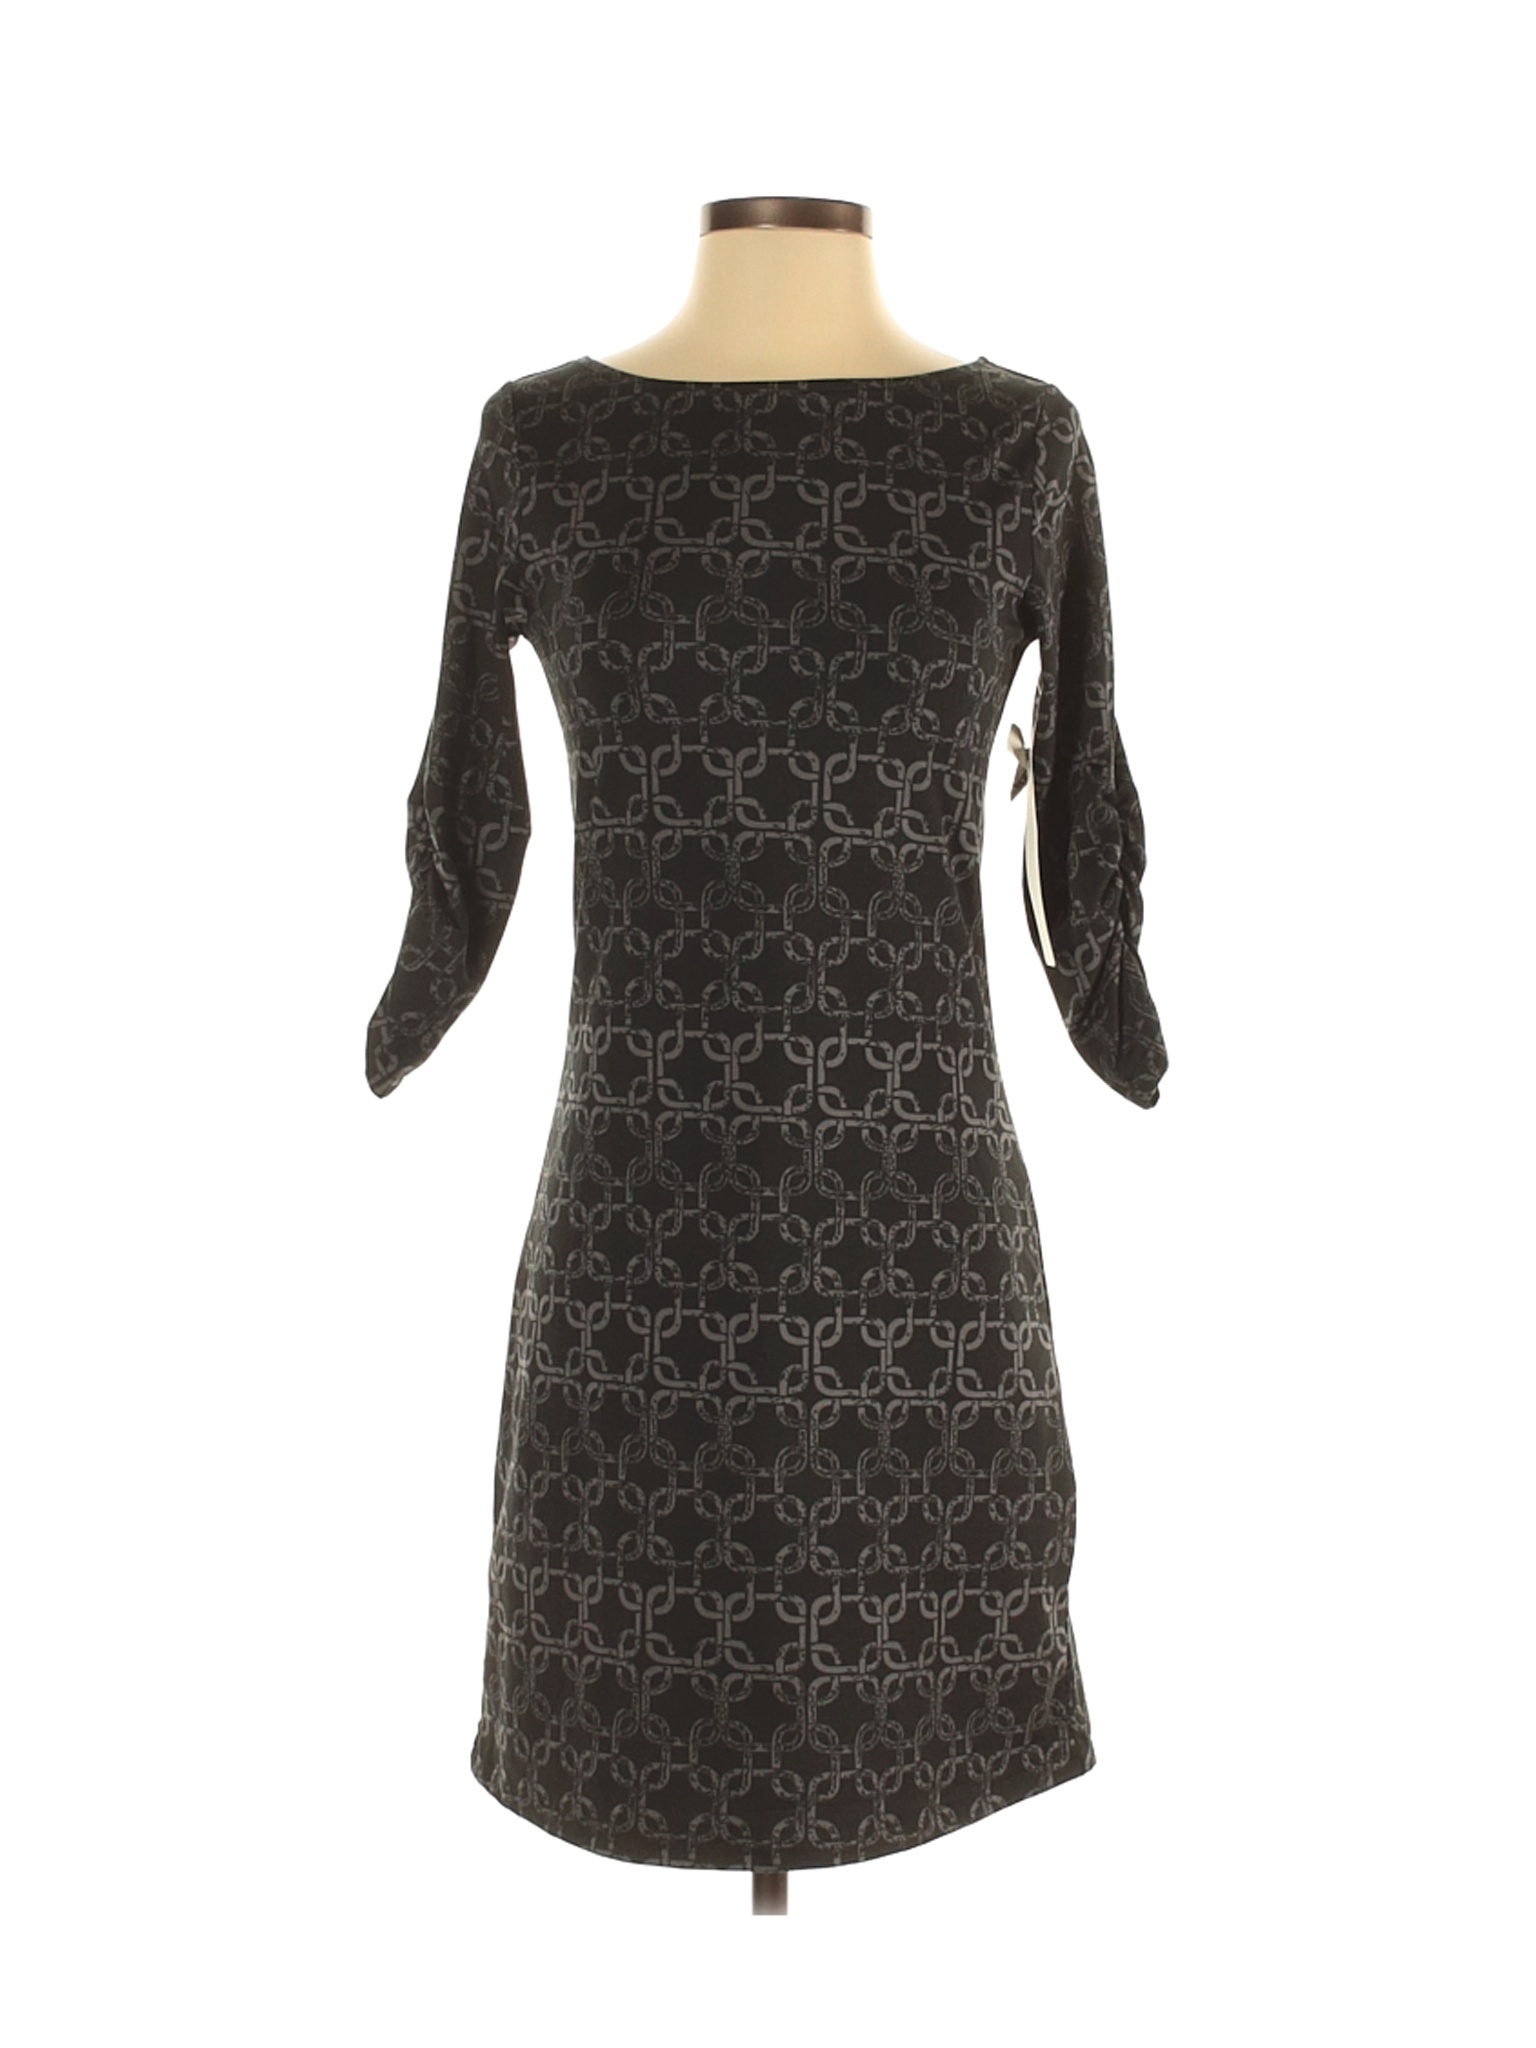 NWT Lola Women Black Casual Dress XS | eBay